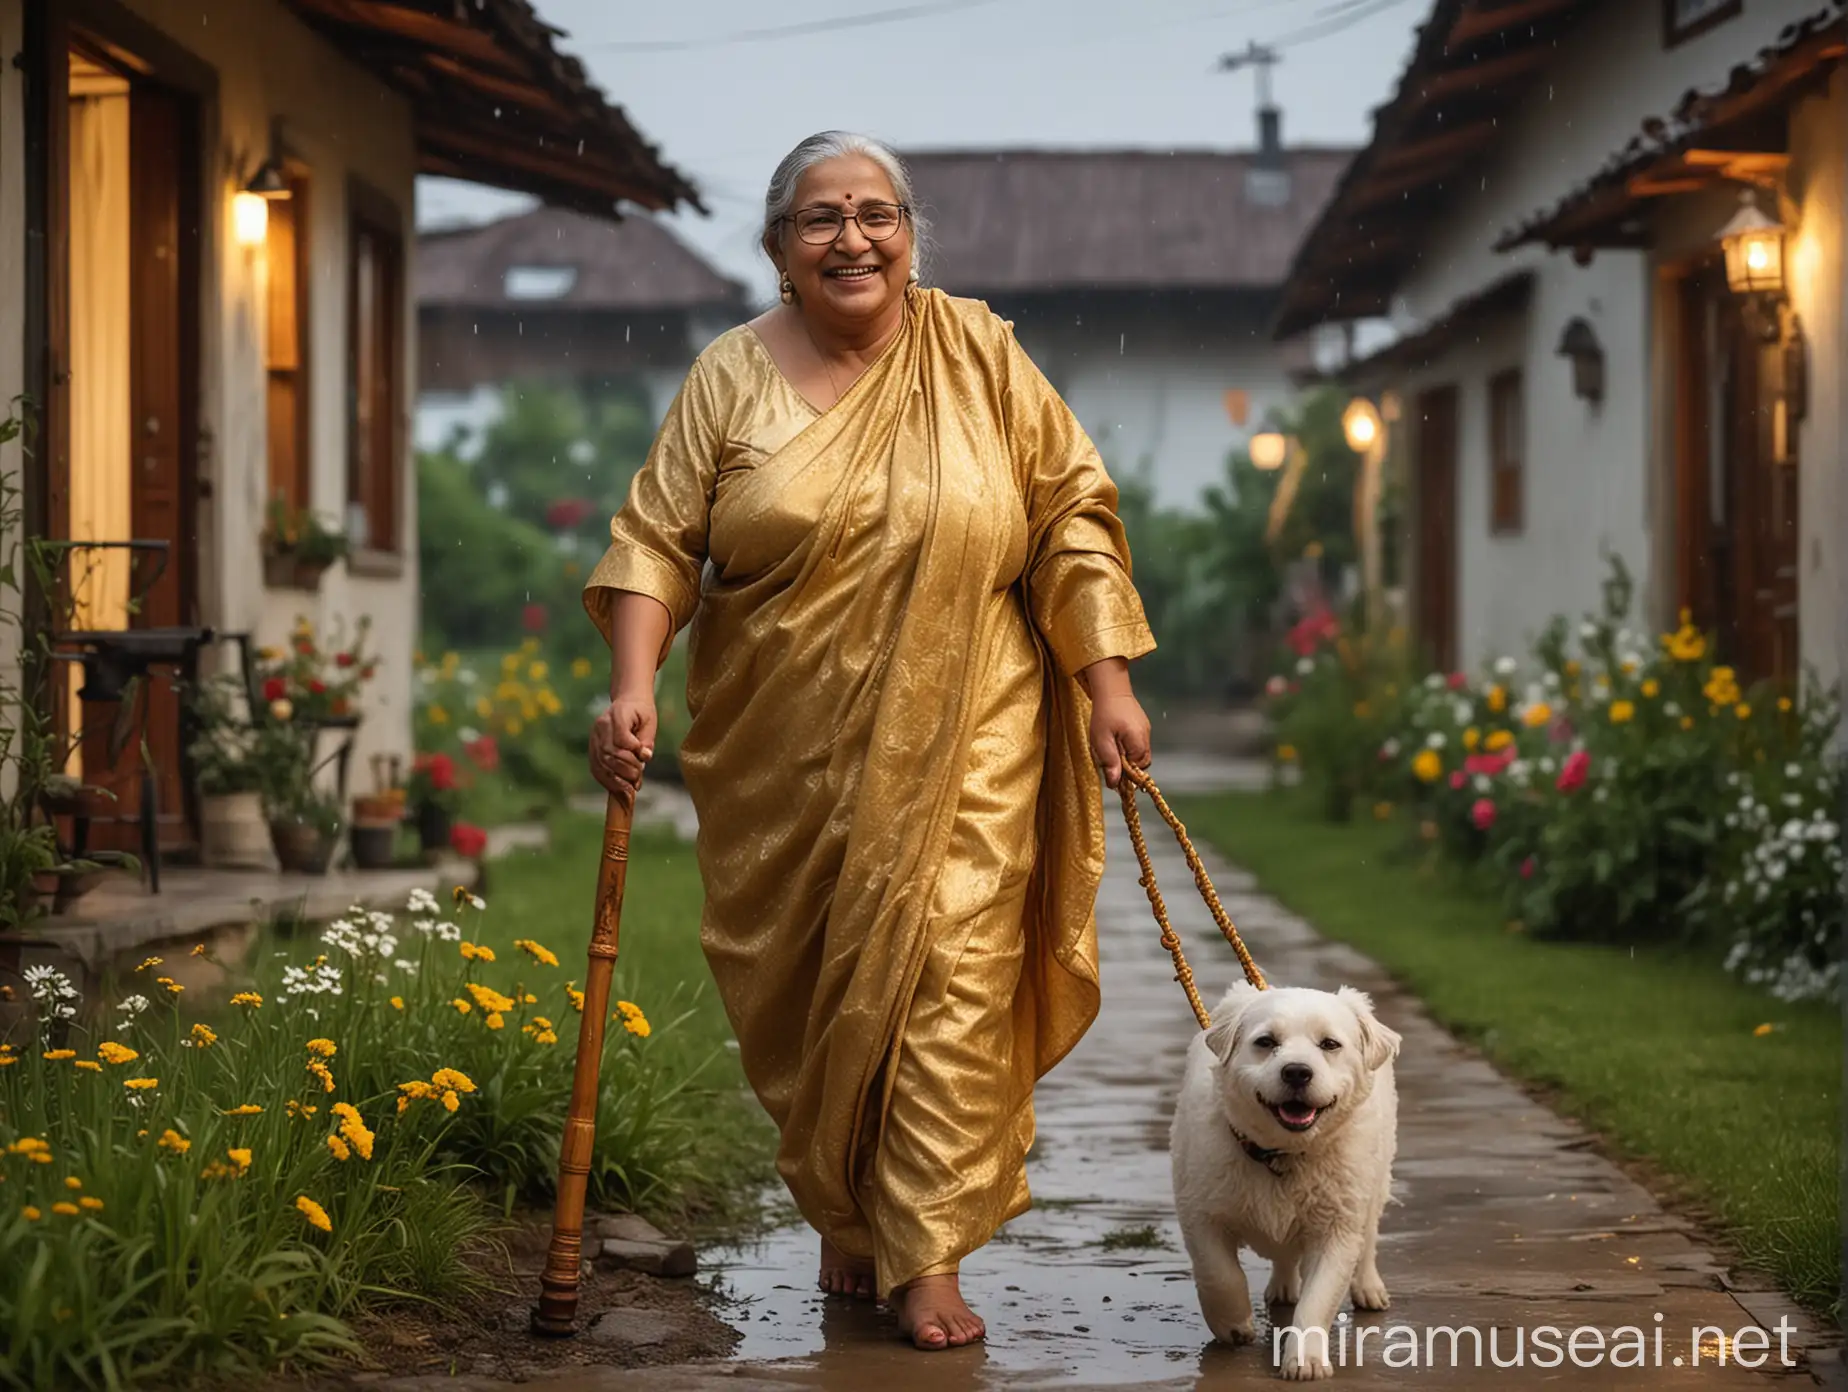 Joyful Elderly Woman Walking with Dog in Luxurious Nighttime Rain